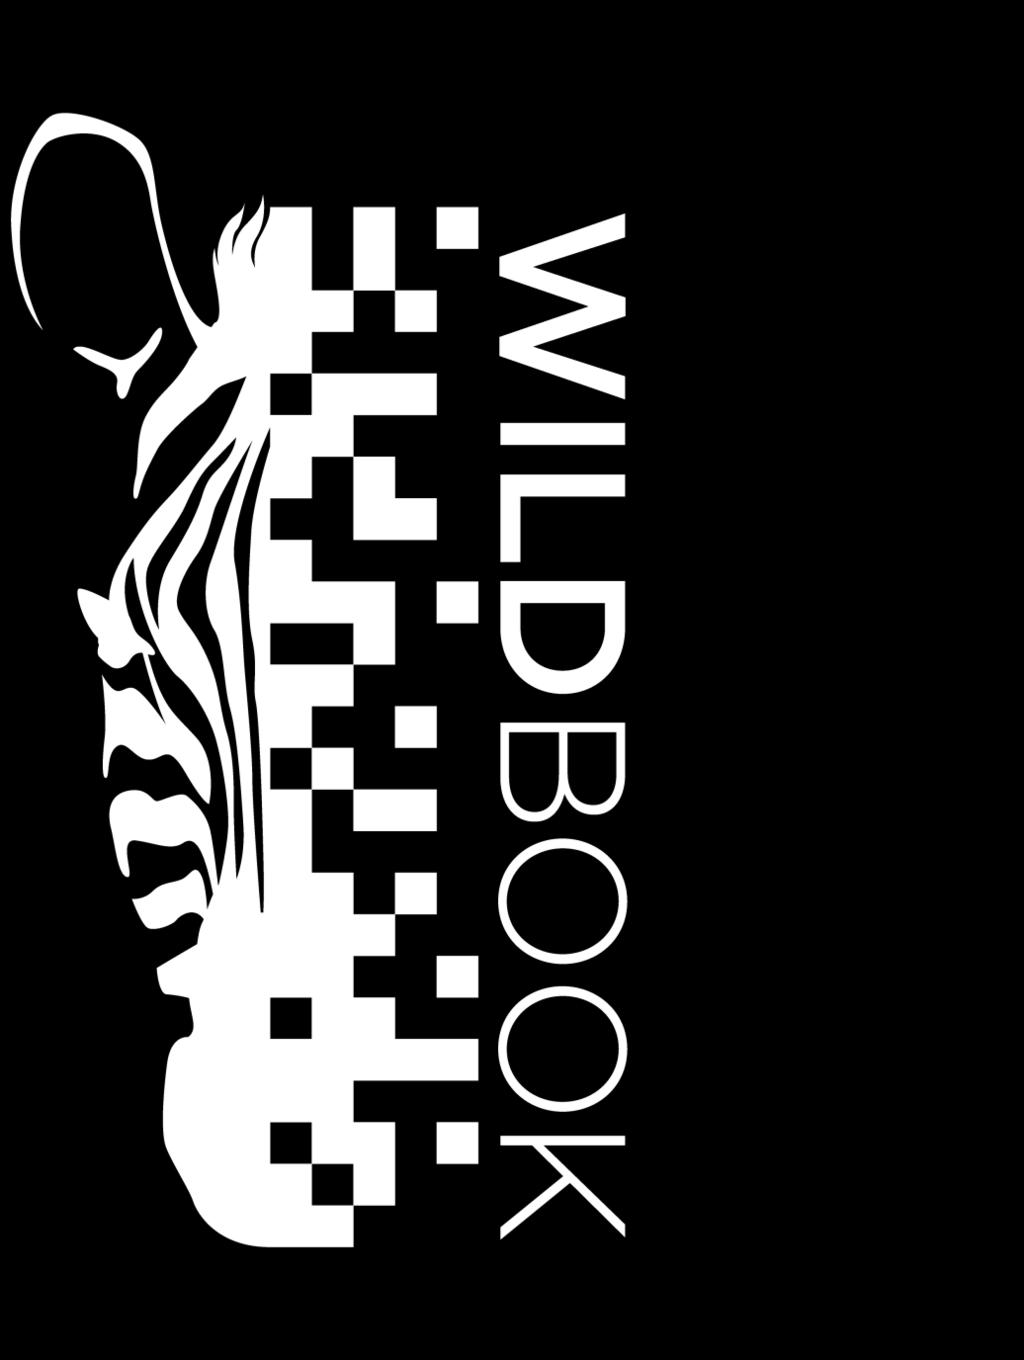 www.wildbook.